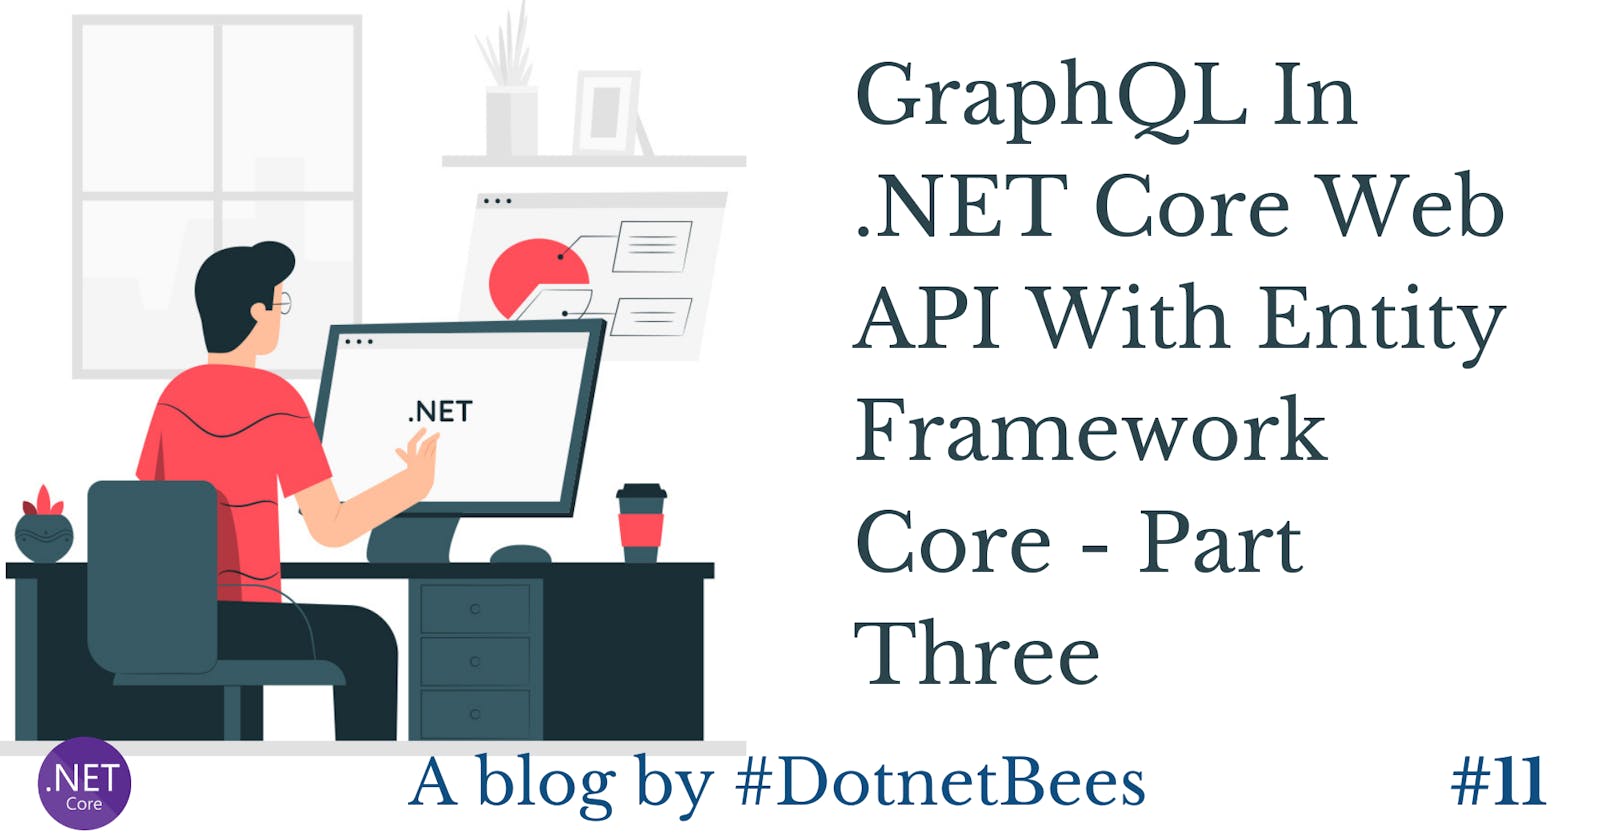 GraphQL In .NET Core Web API With Entity Framework Core - Part Three